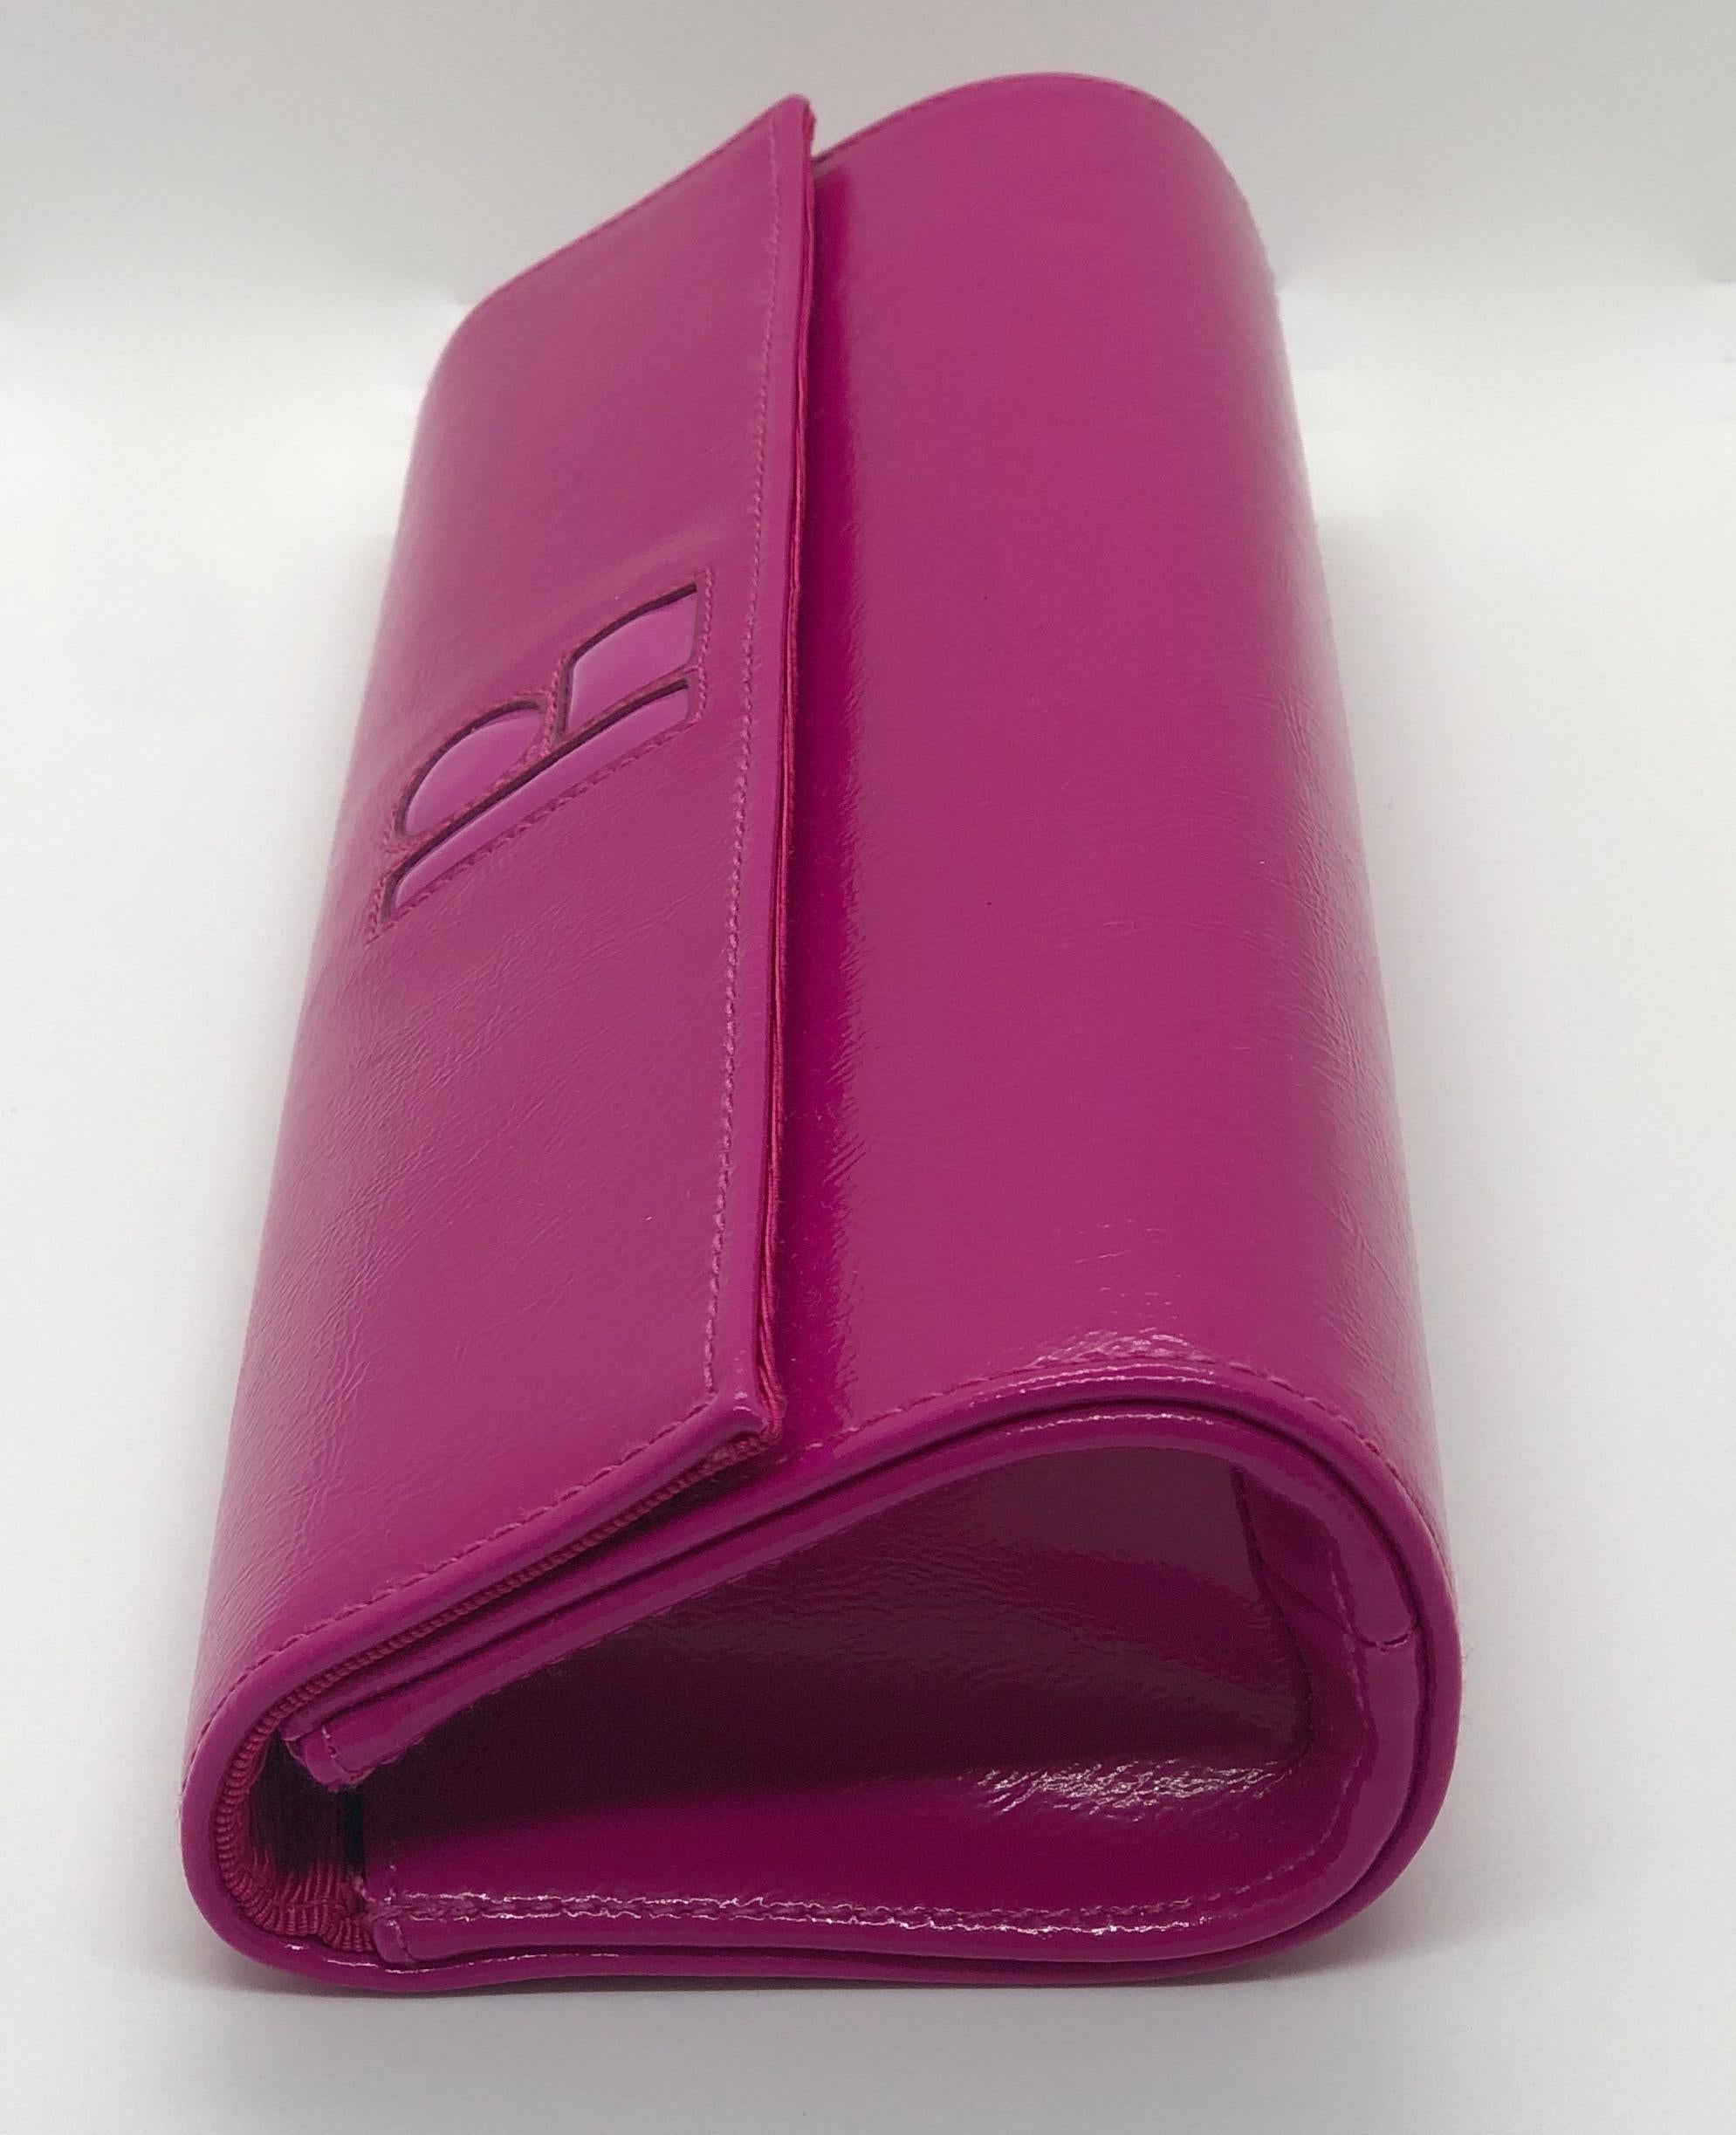 Lisa Perry Mod Fuchsia Pink Patent Leather Clutch Handbag w/ Magnetic Closure  4